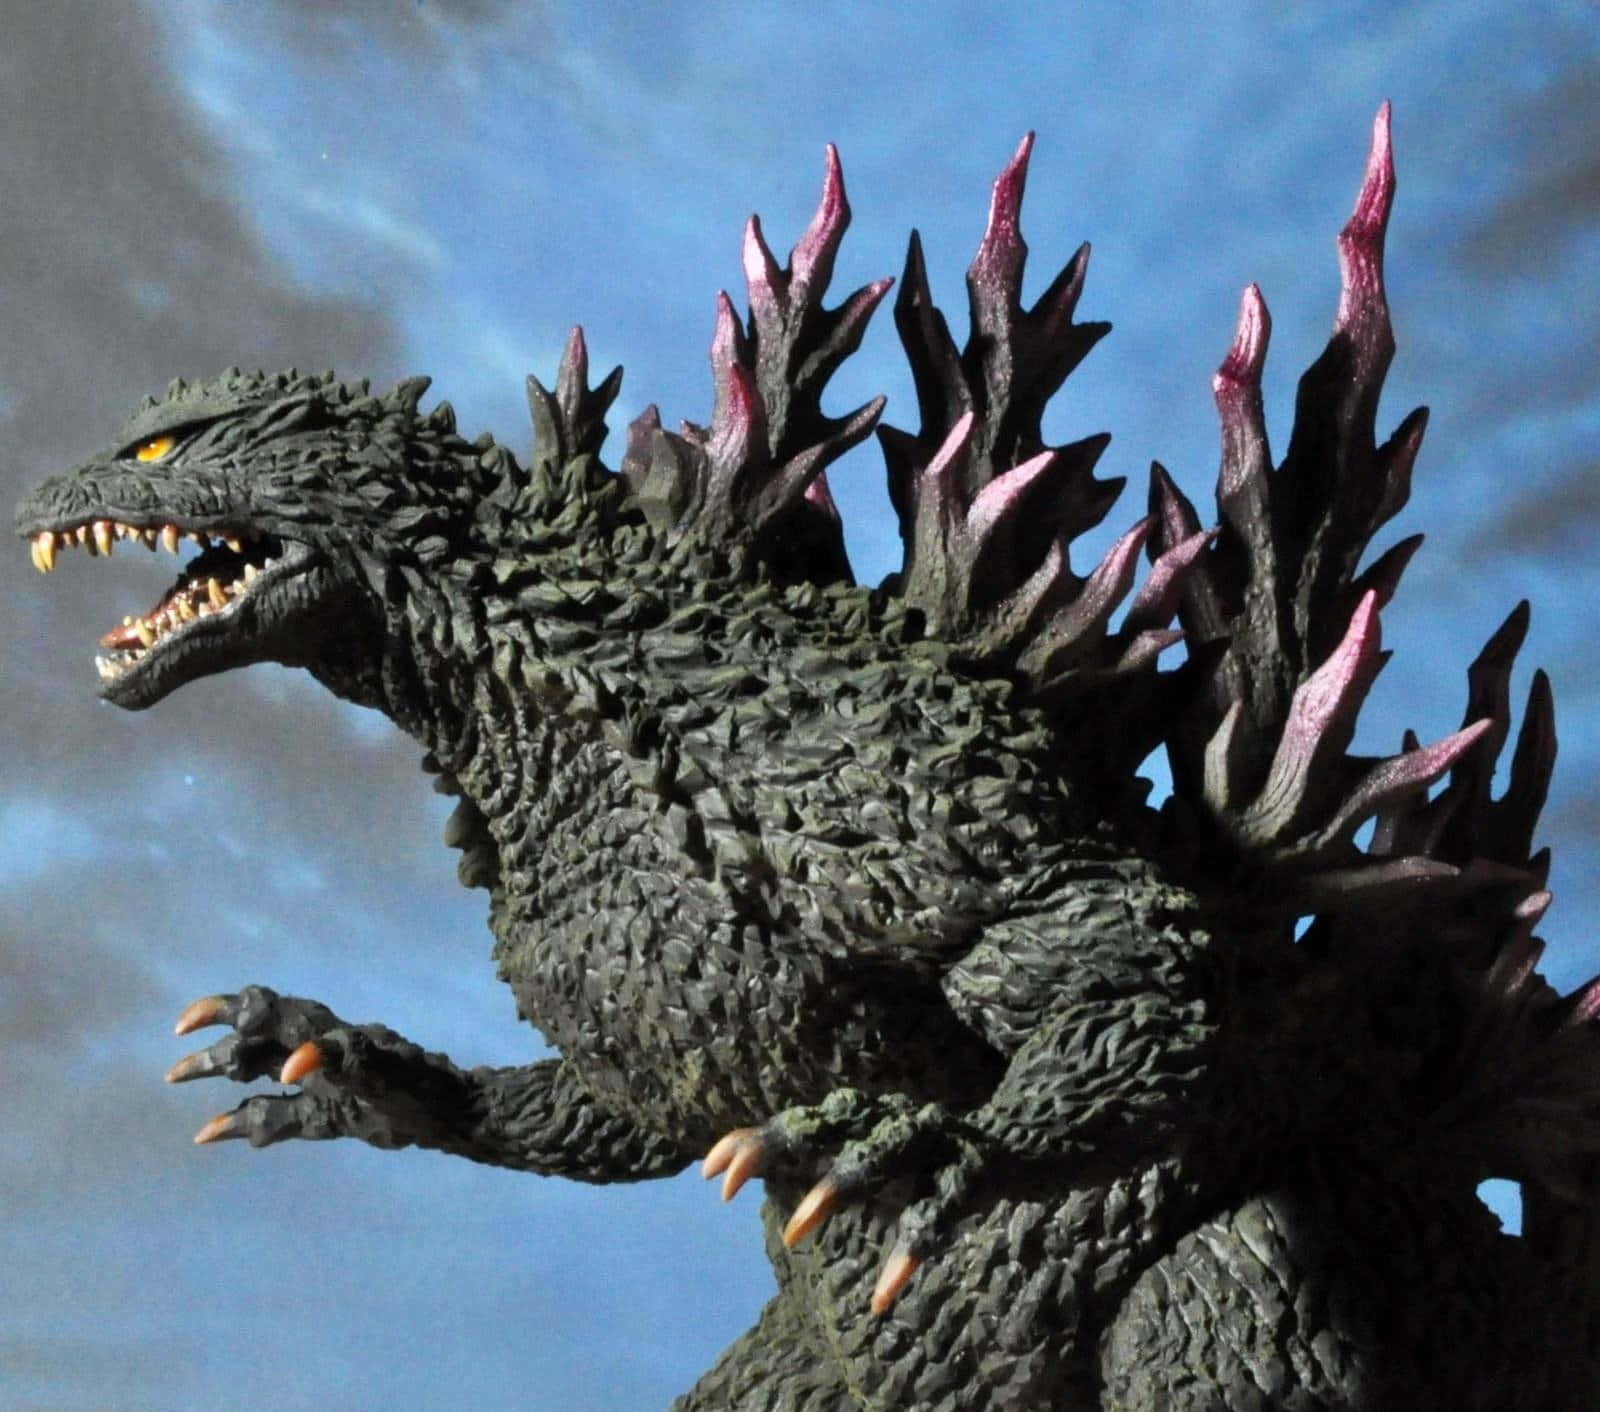 Caption: Godzilla 2000 Roaring in the City Wallpaper